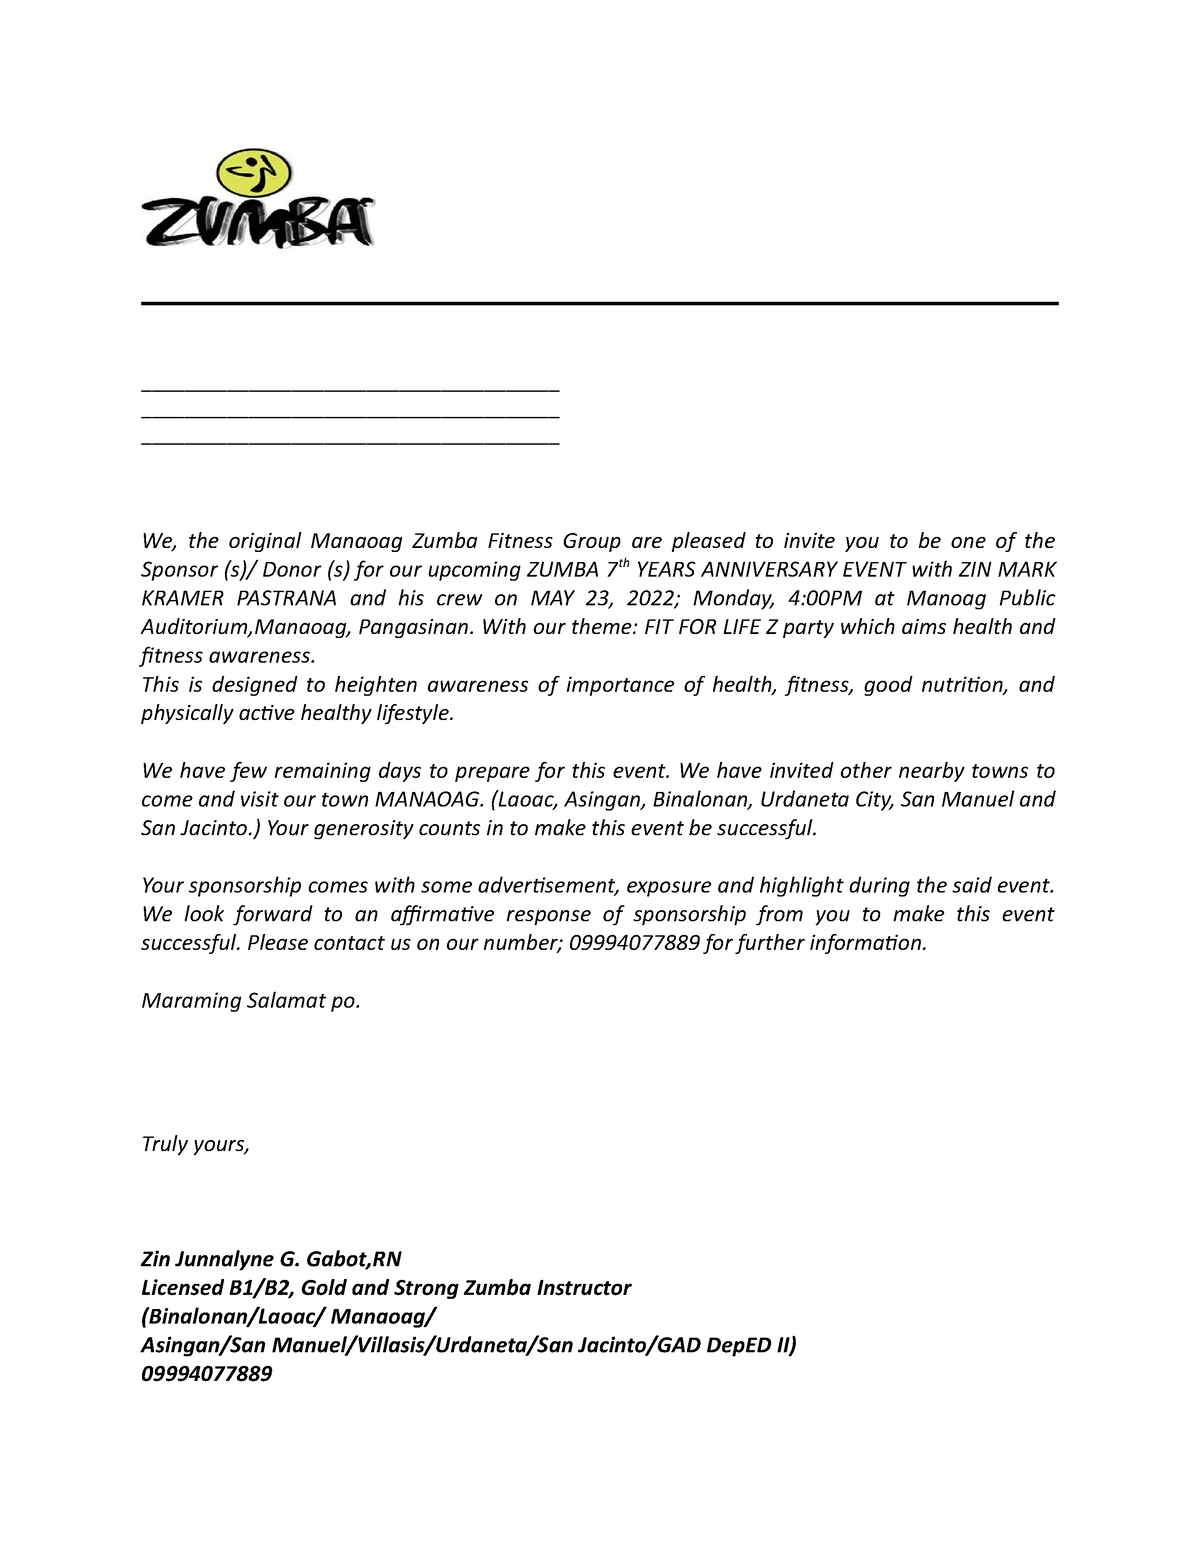 Manaoag sponsorship letter - We, the original Manaoag Zumba Fitness